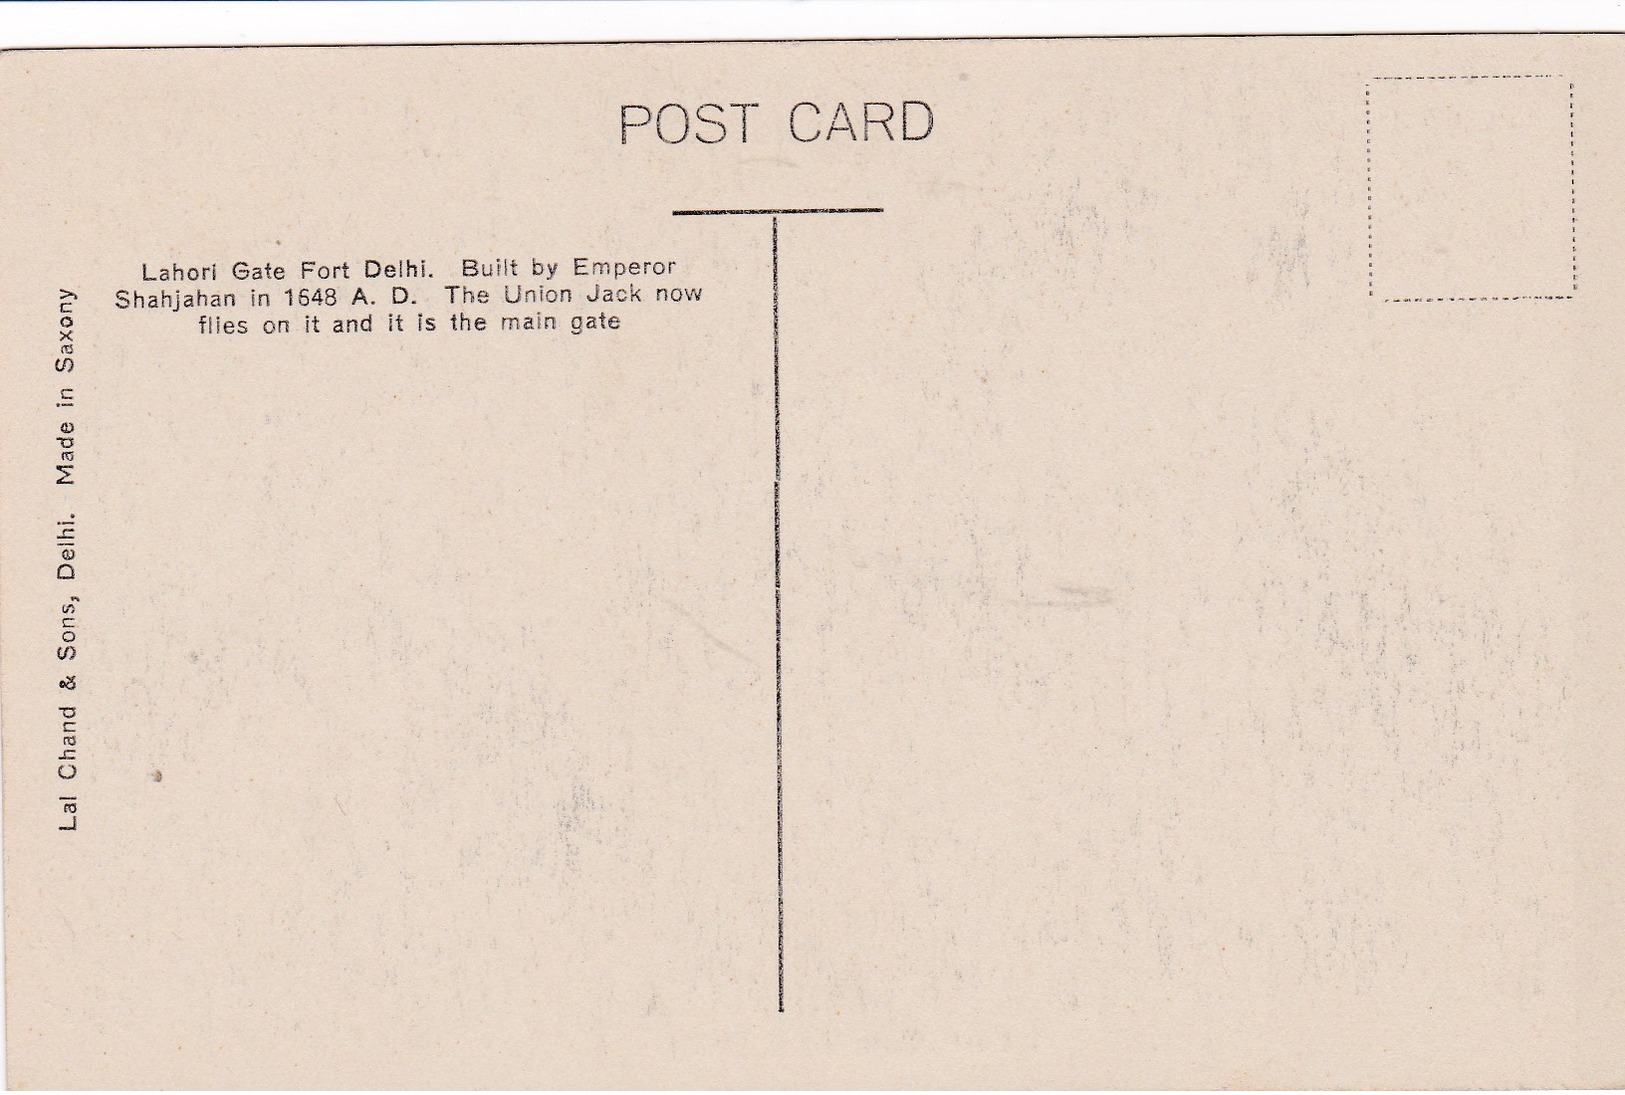 Small Old Postcard Of Lahori Gate Fort Delhi,Delhi, India,S1. - India